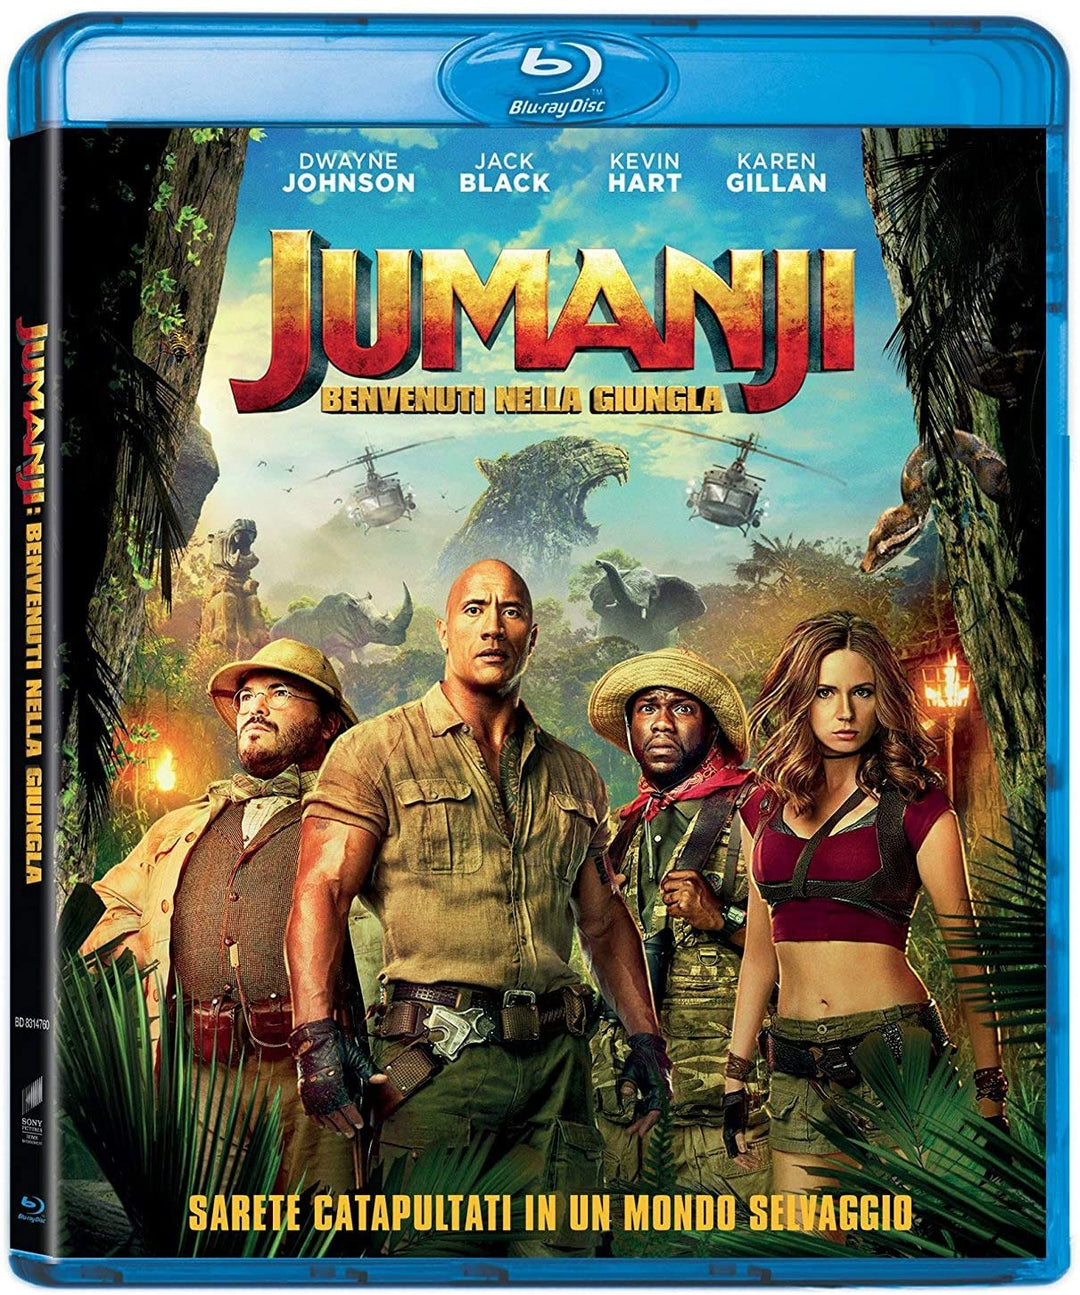 Jumanji: Welcome To The Jungle - Family/Fantasy [Blu-ray]